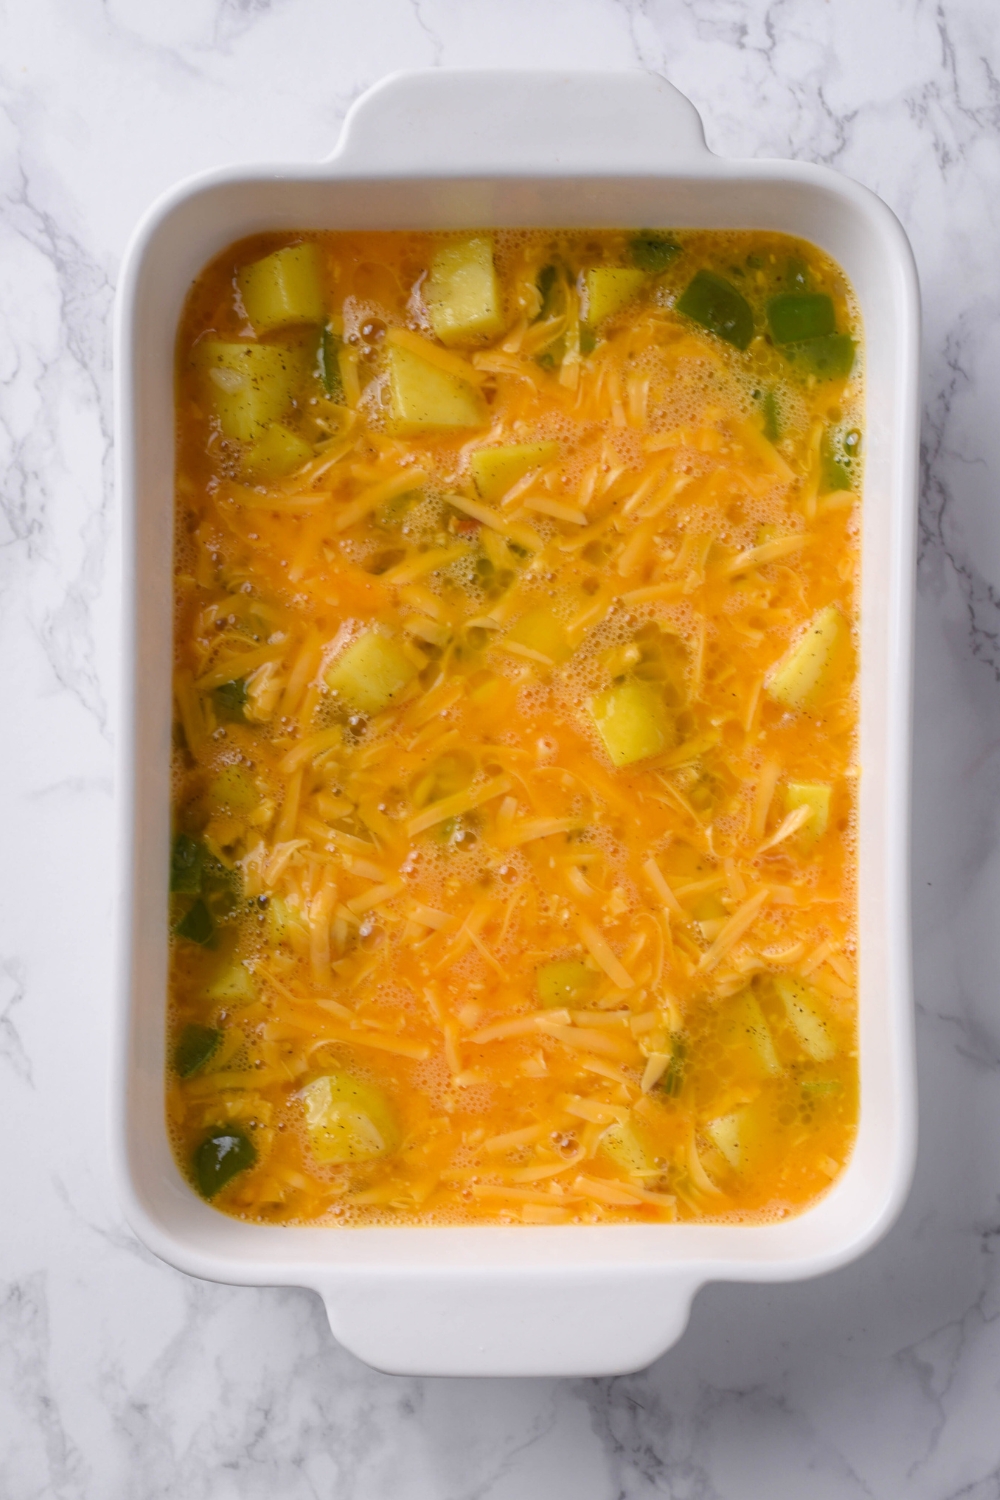 A casserole dish with uncooked potato casserole.